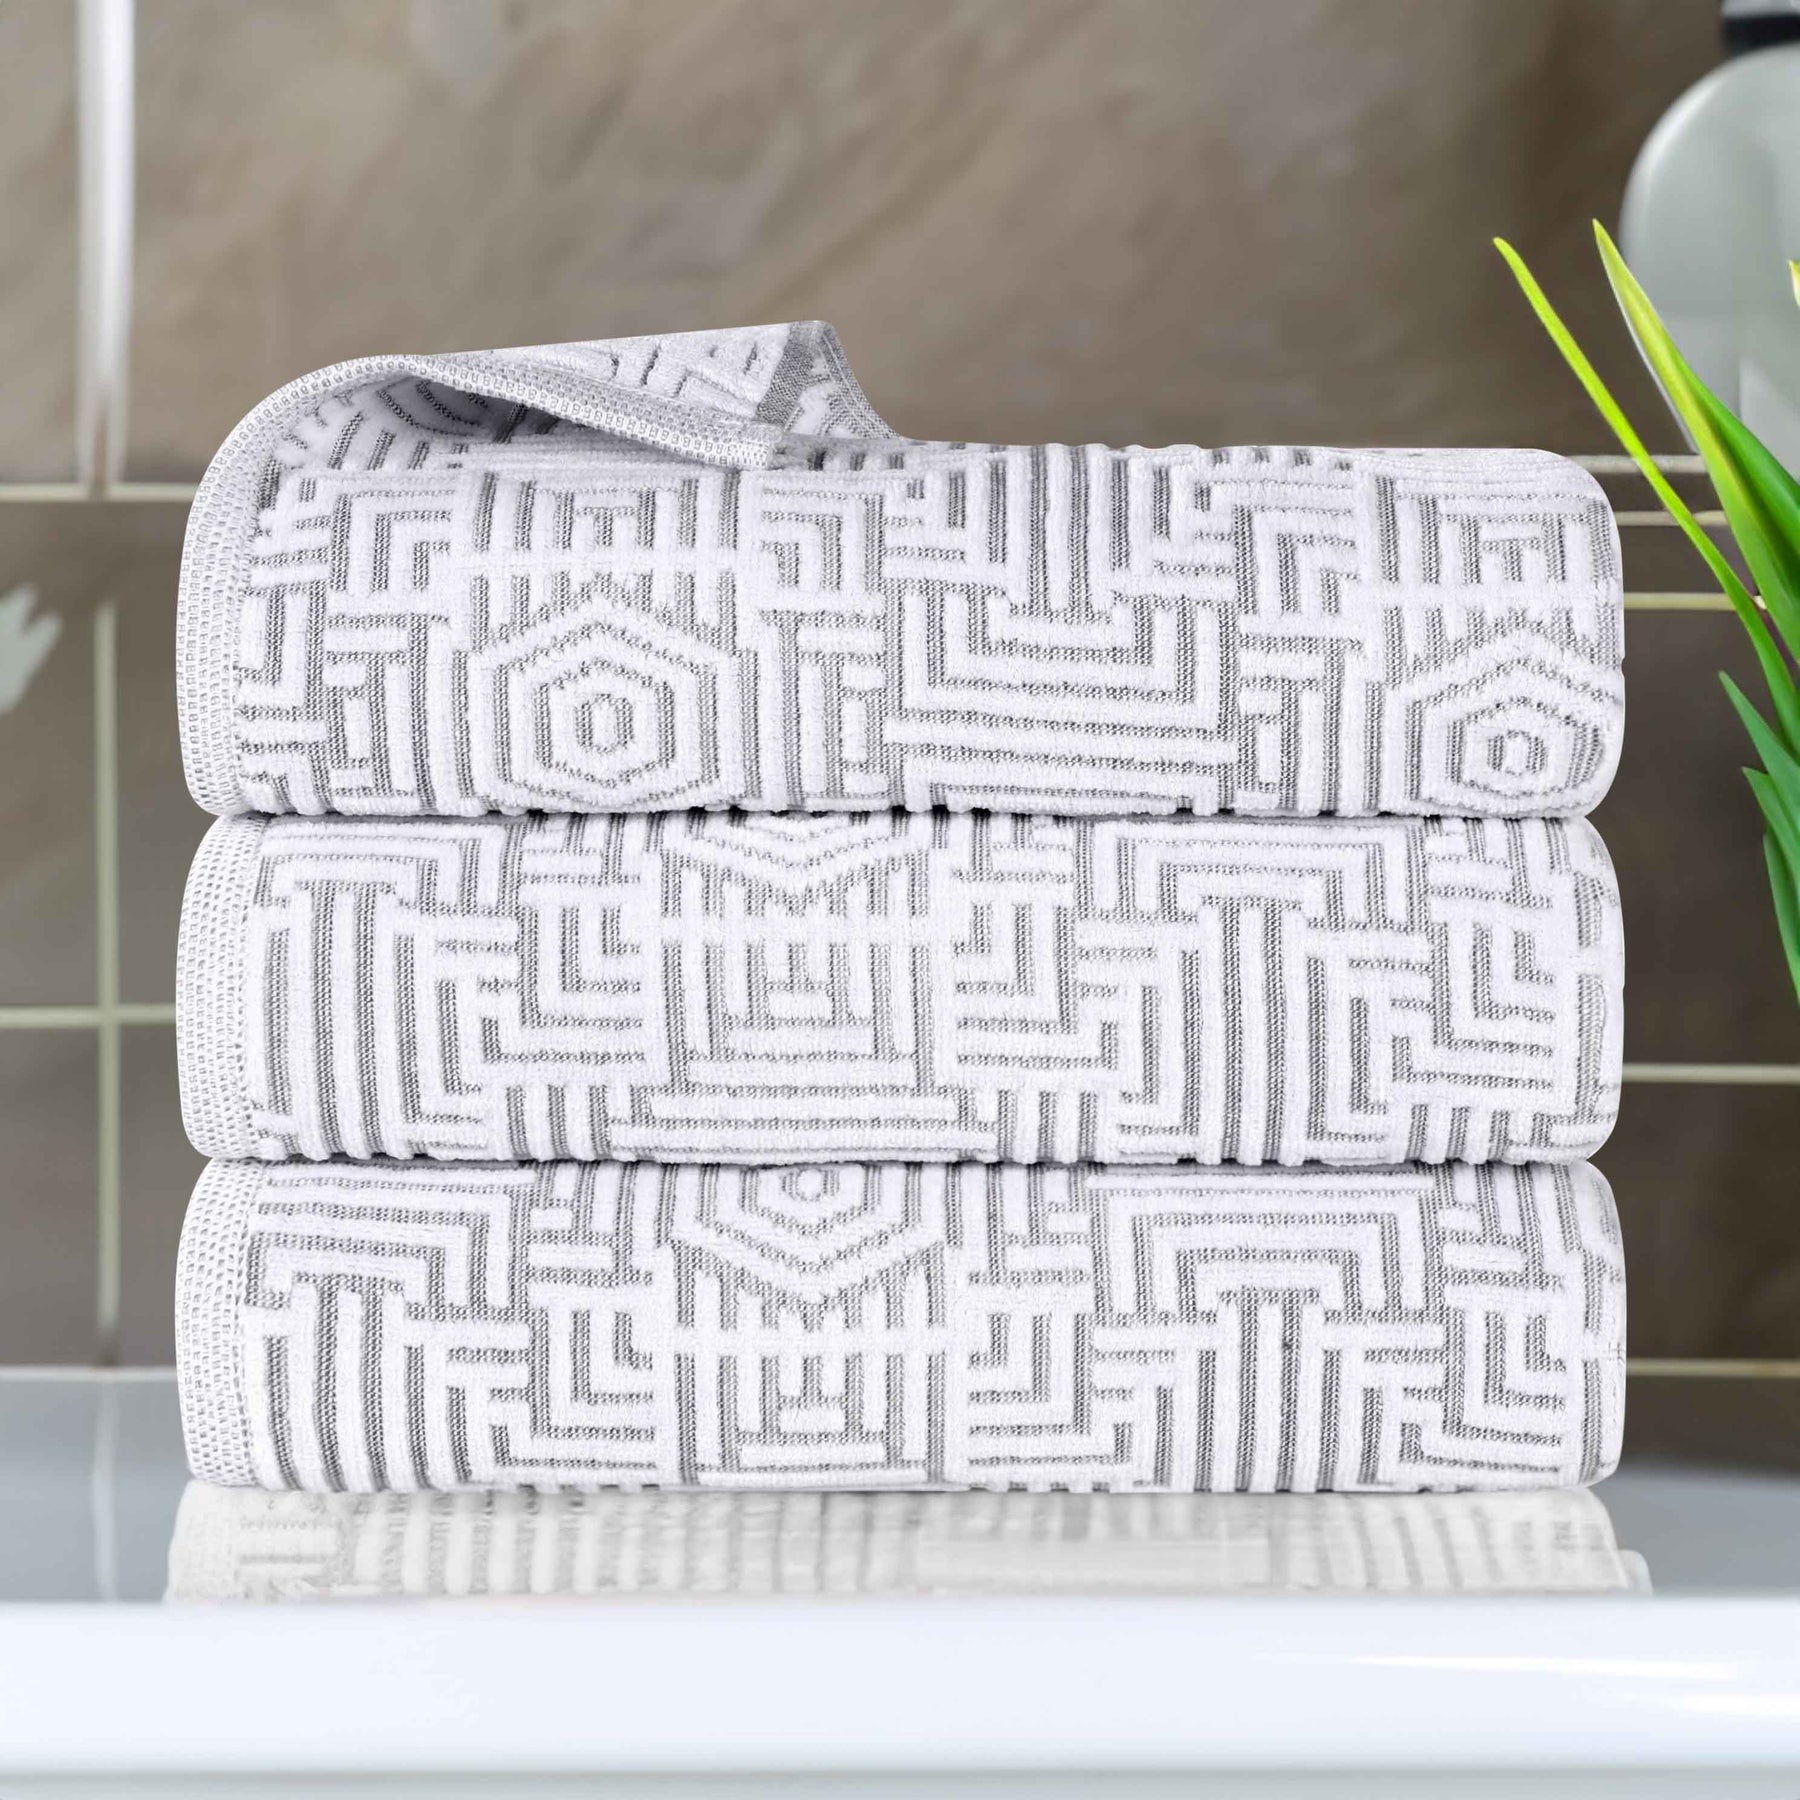 Cotton Modern Geometric Jacquard Plush Absorbent Bath Towel Set of 3 - Platinum